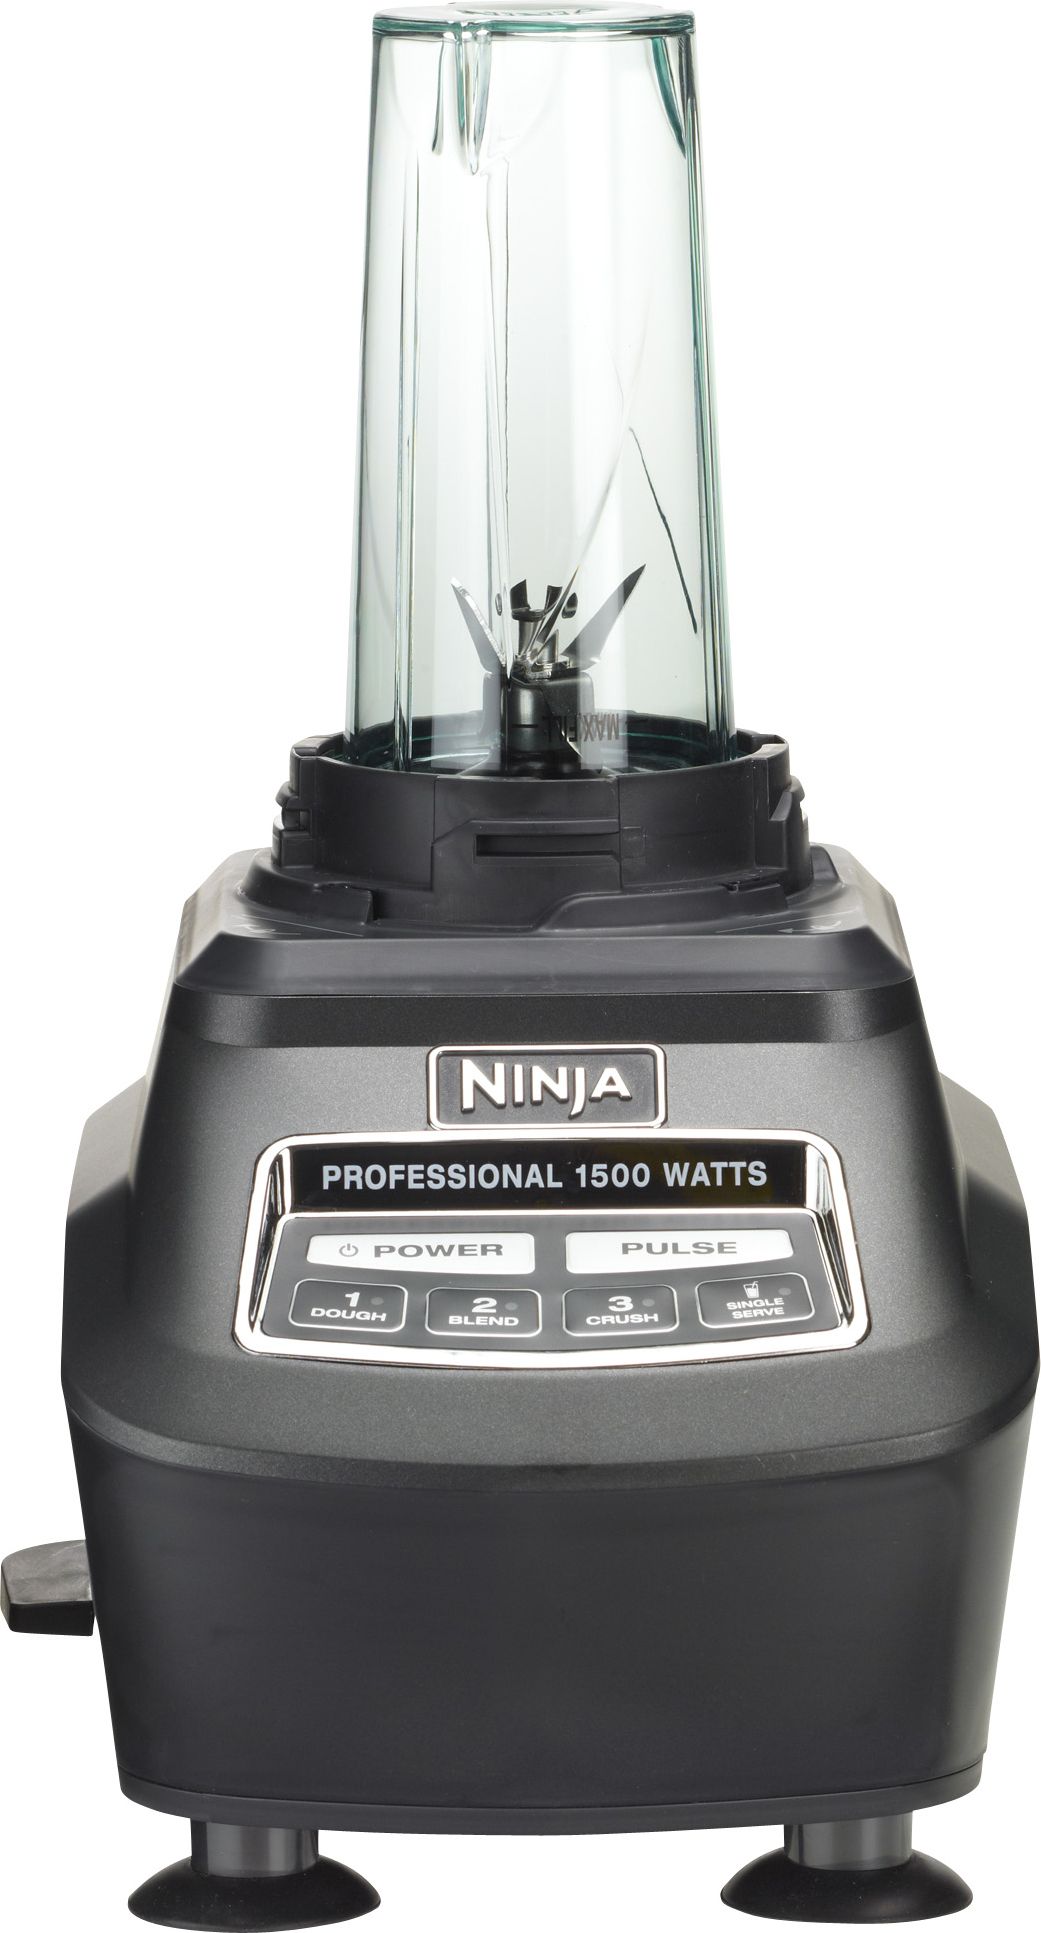 Fingerhut - Ninja Blender with Single-Serve Function